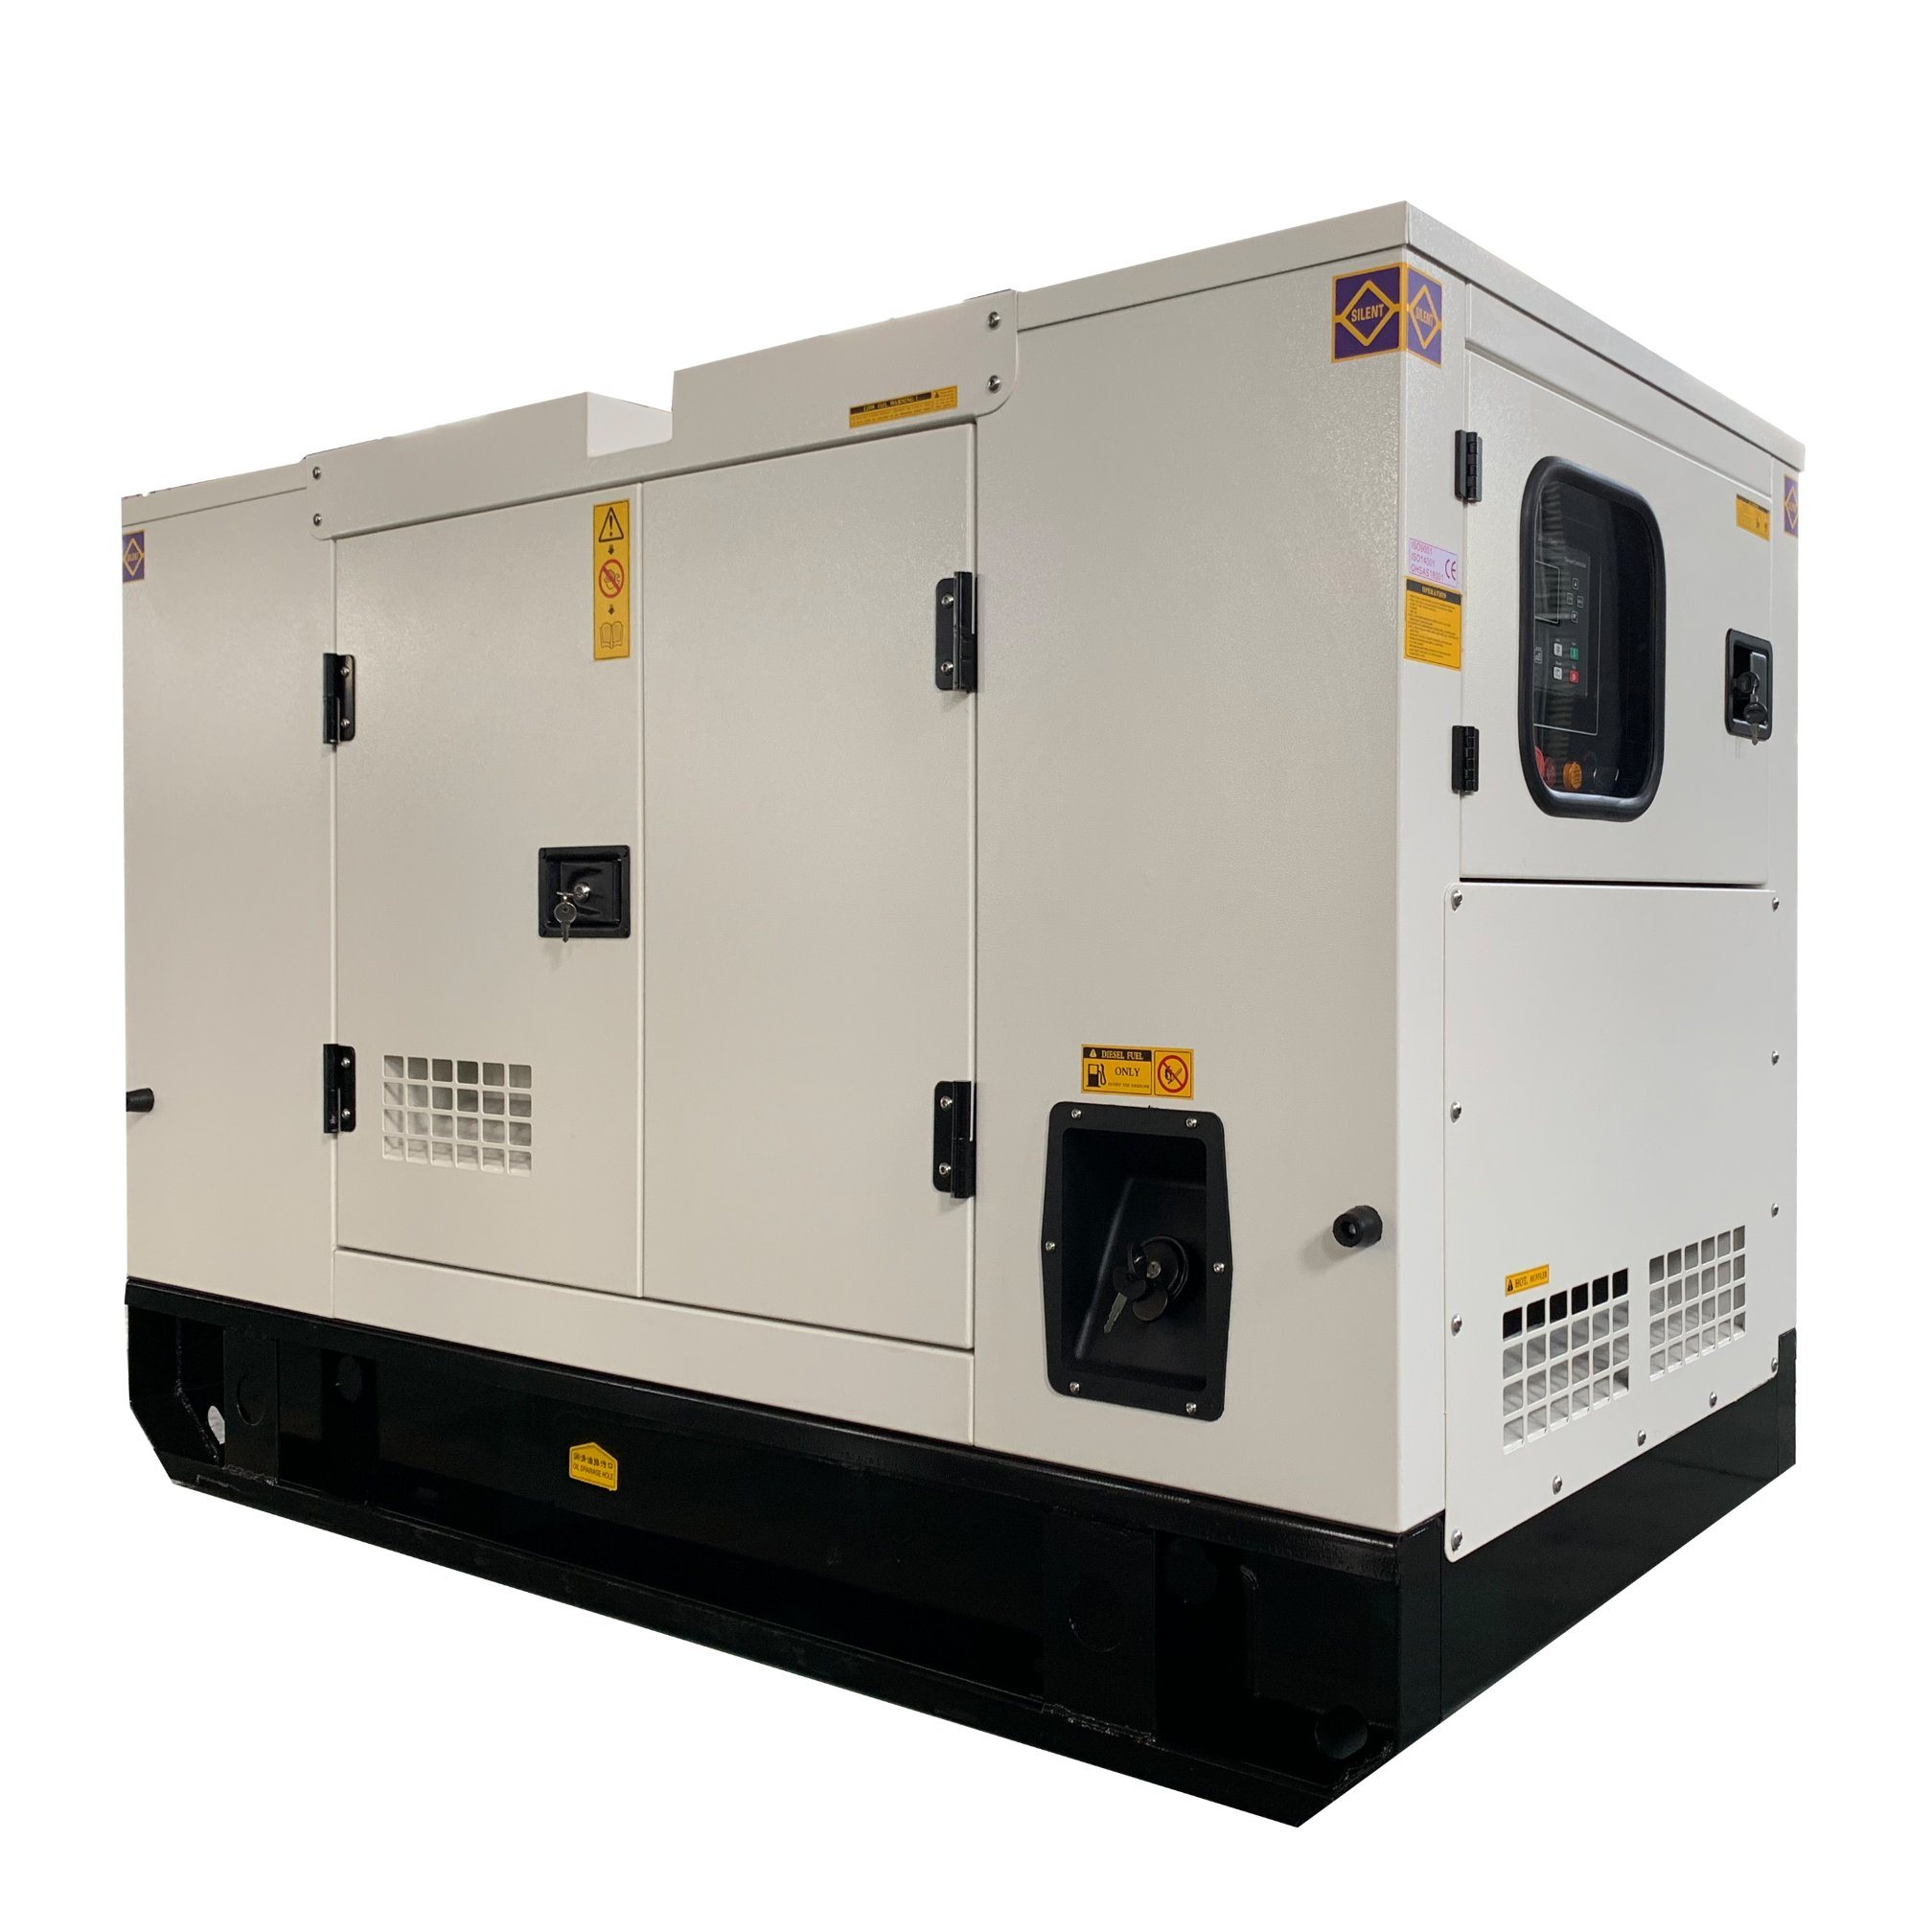 C-Way Engineering Exports offer a comprehensive range of heavy duty Silent Diesel Generator.